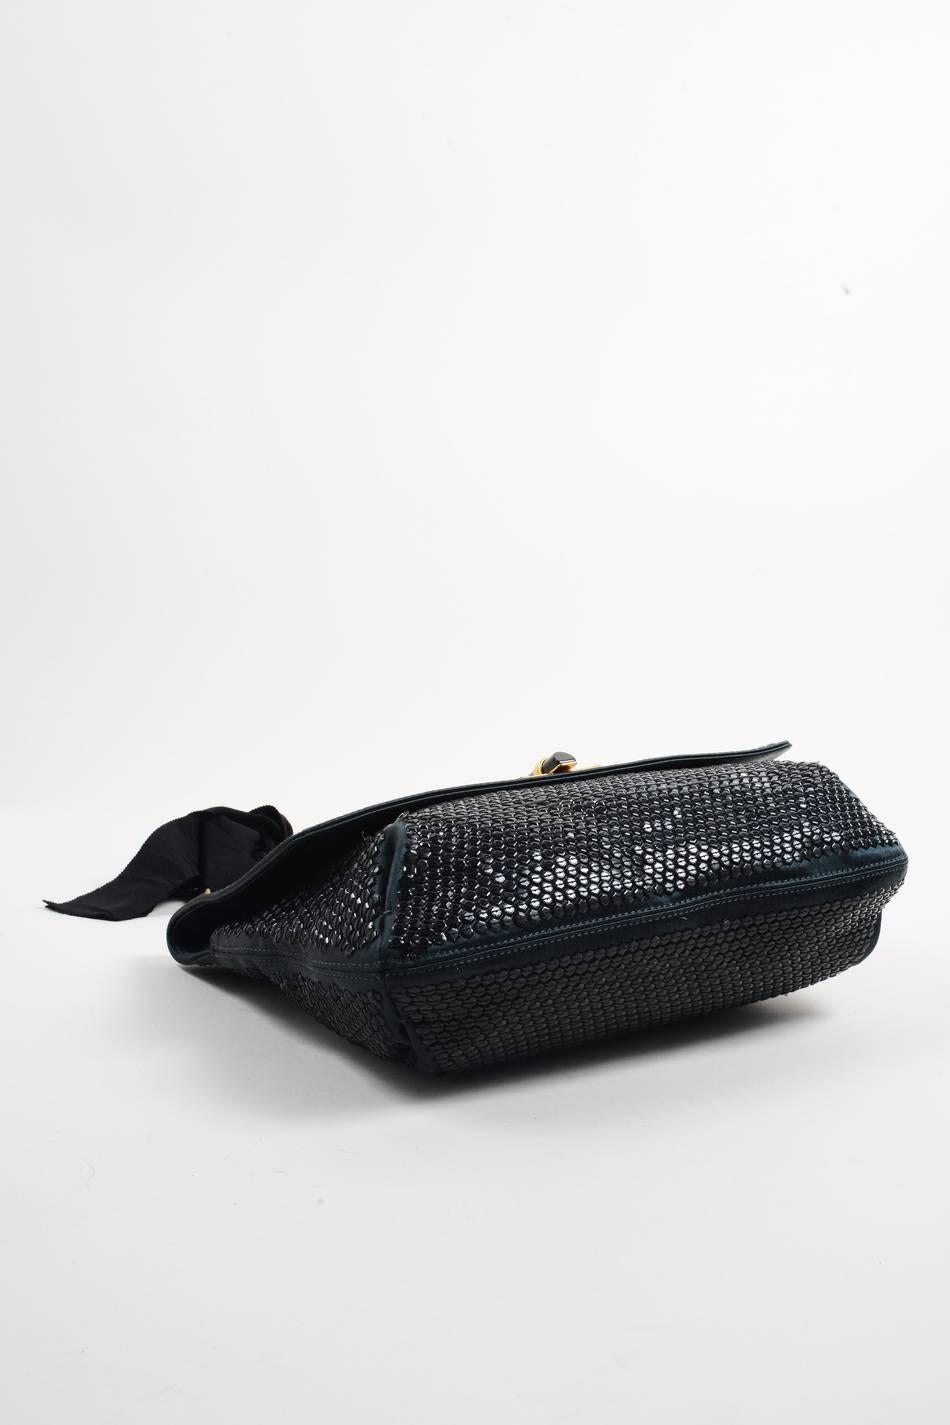 Lanvin Black Satin Bijoux Sequin Turnlock 'Happy' Shoulder Bag In Good Condition For Sale In Chicago, IL